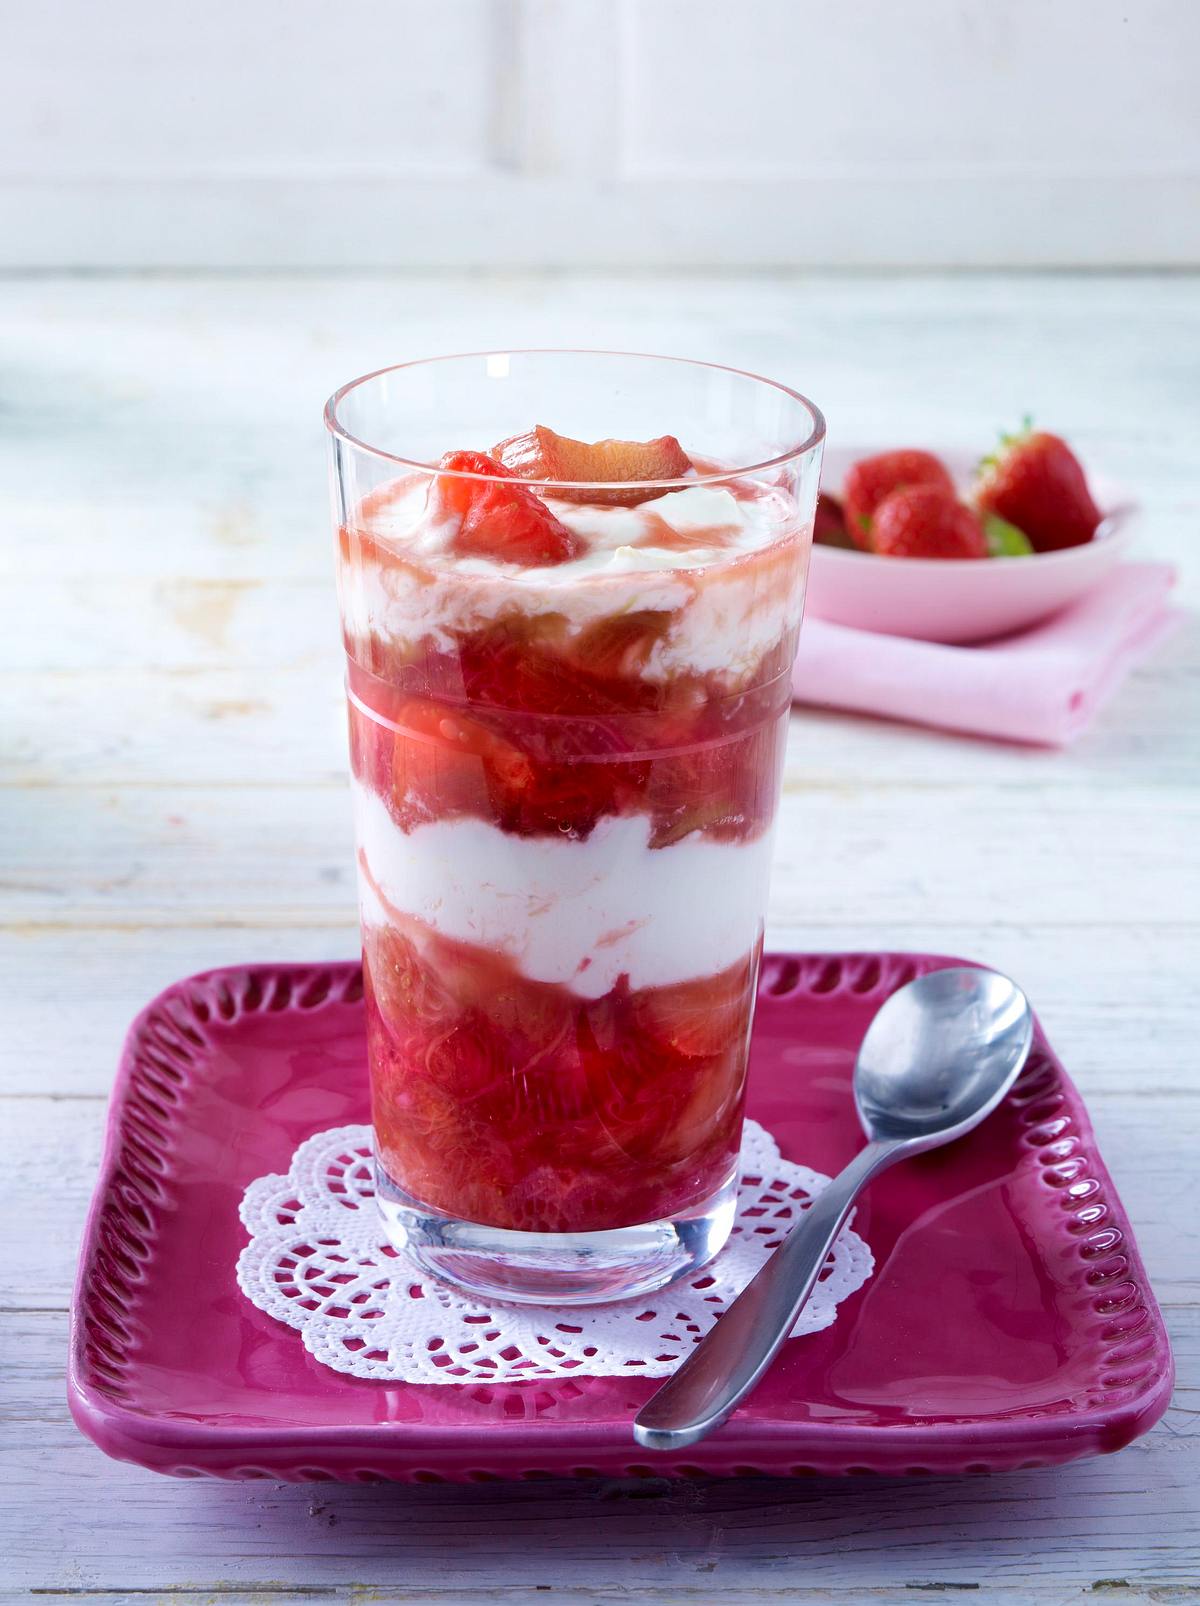 Rhabarber-Erdbeer-Schichtspeise mit Joghurt Rezept